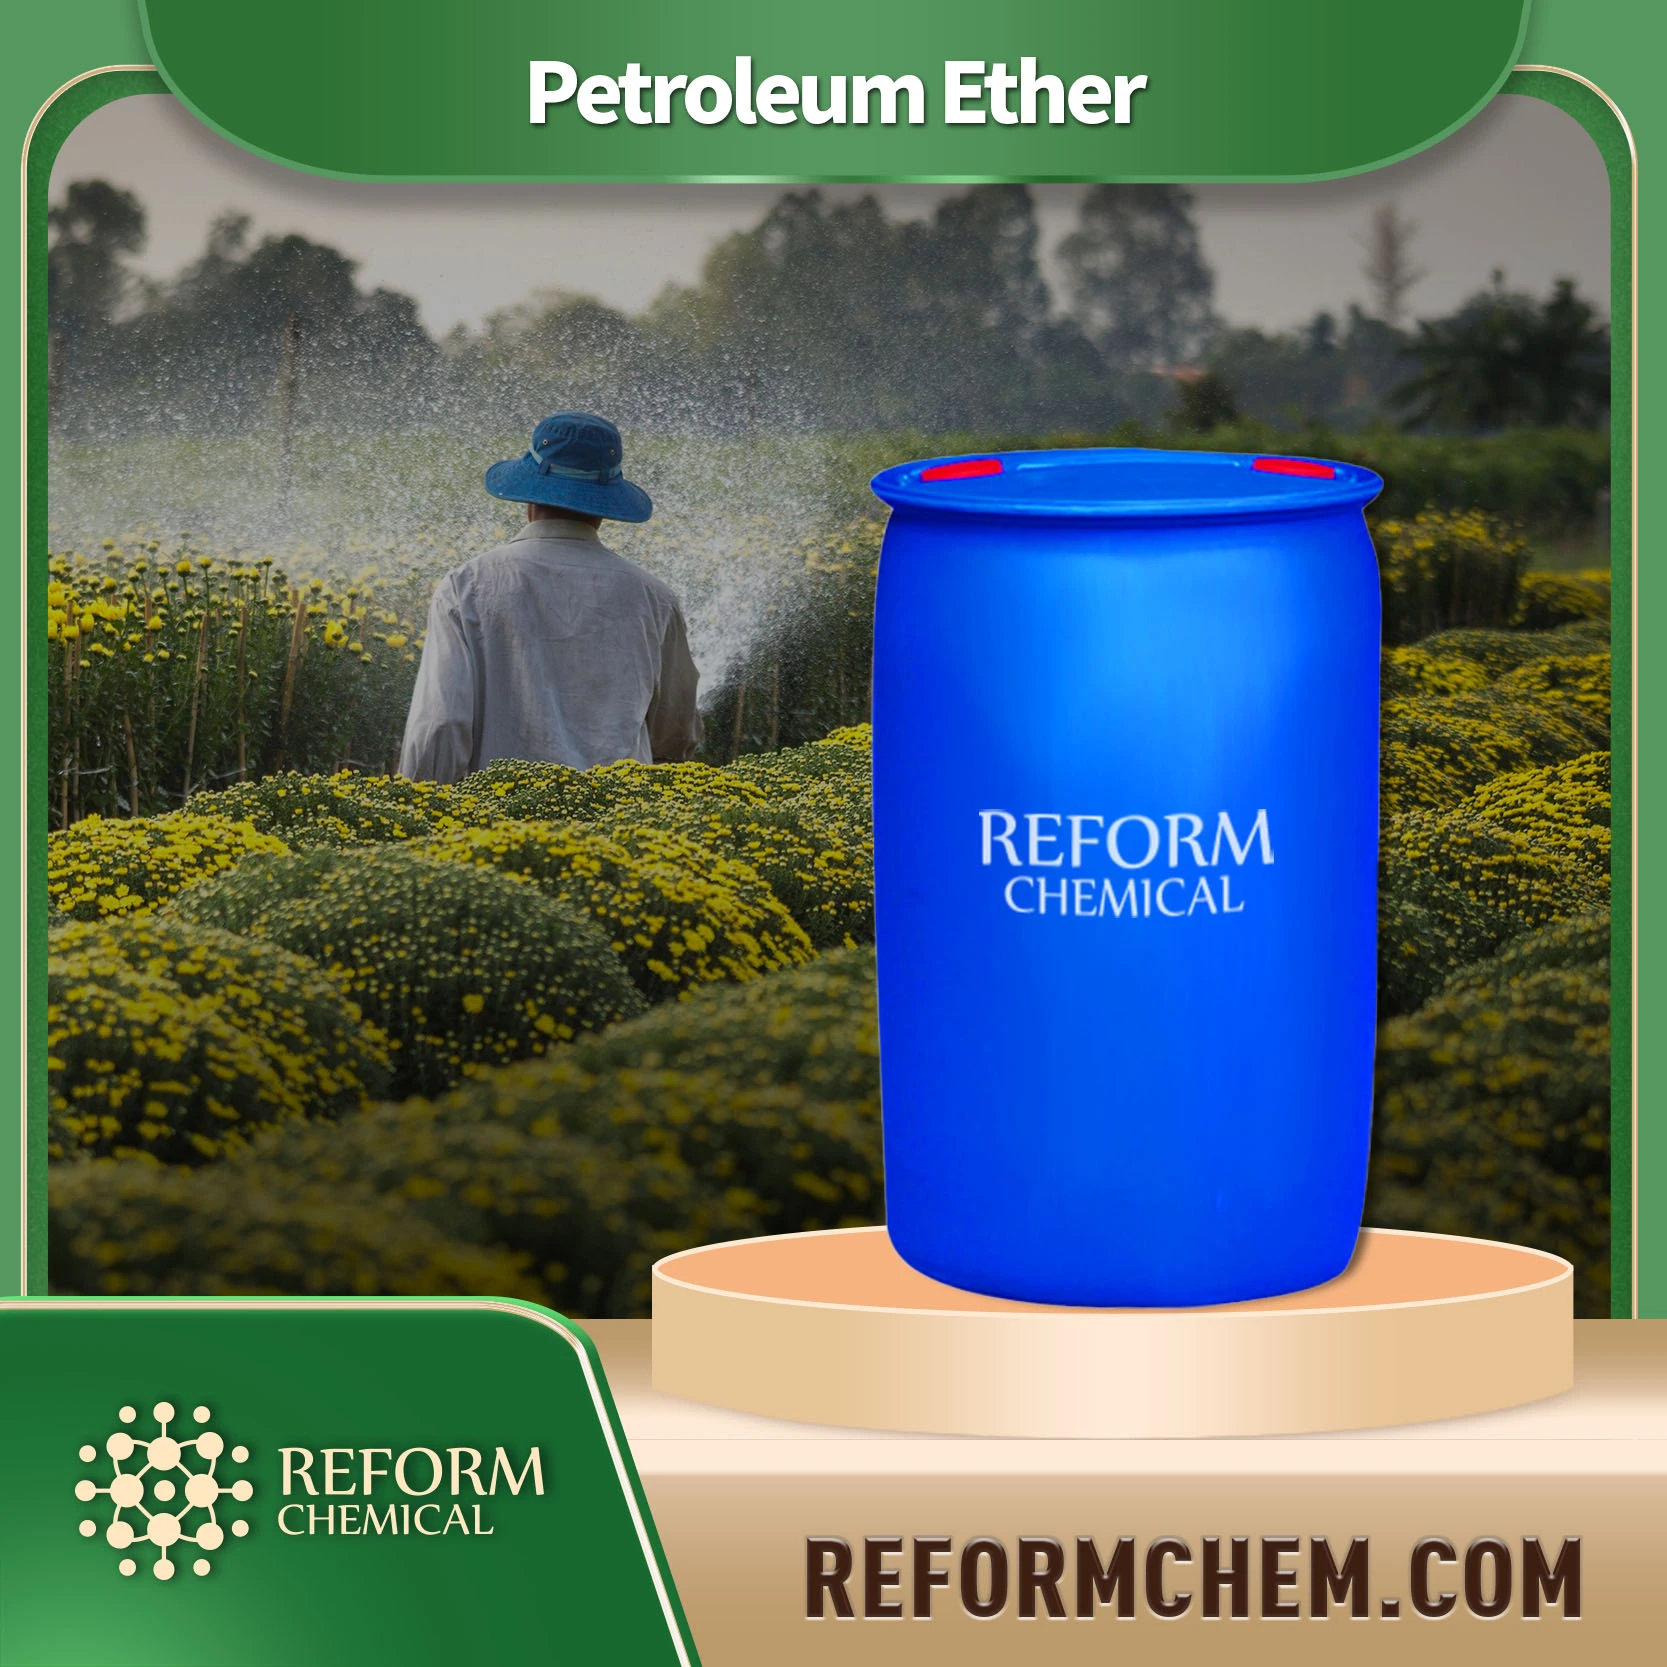 petroleum ether8032 32 4